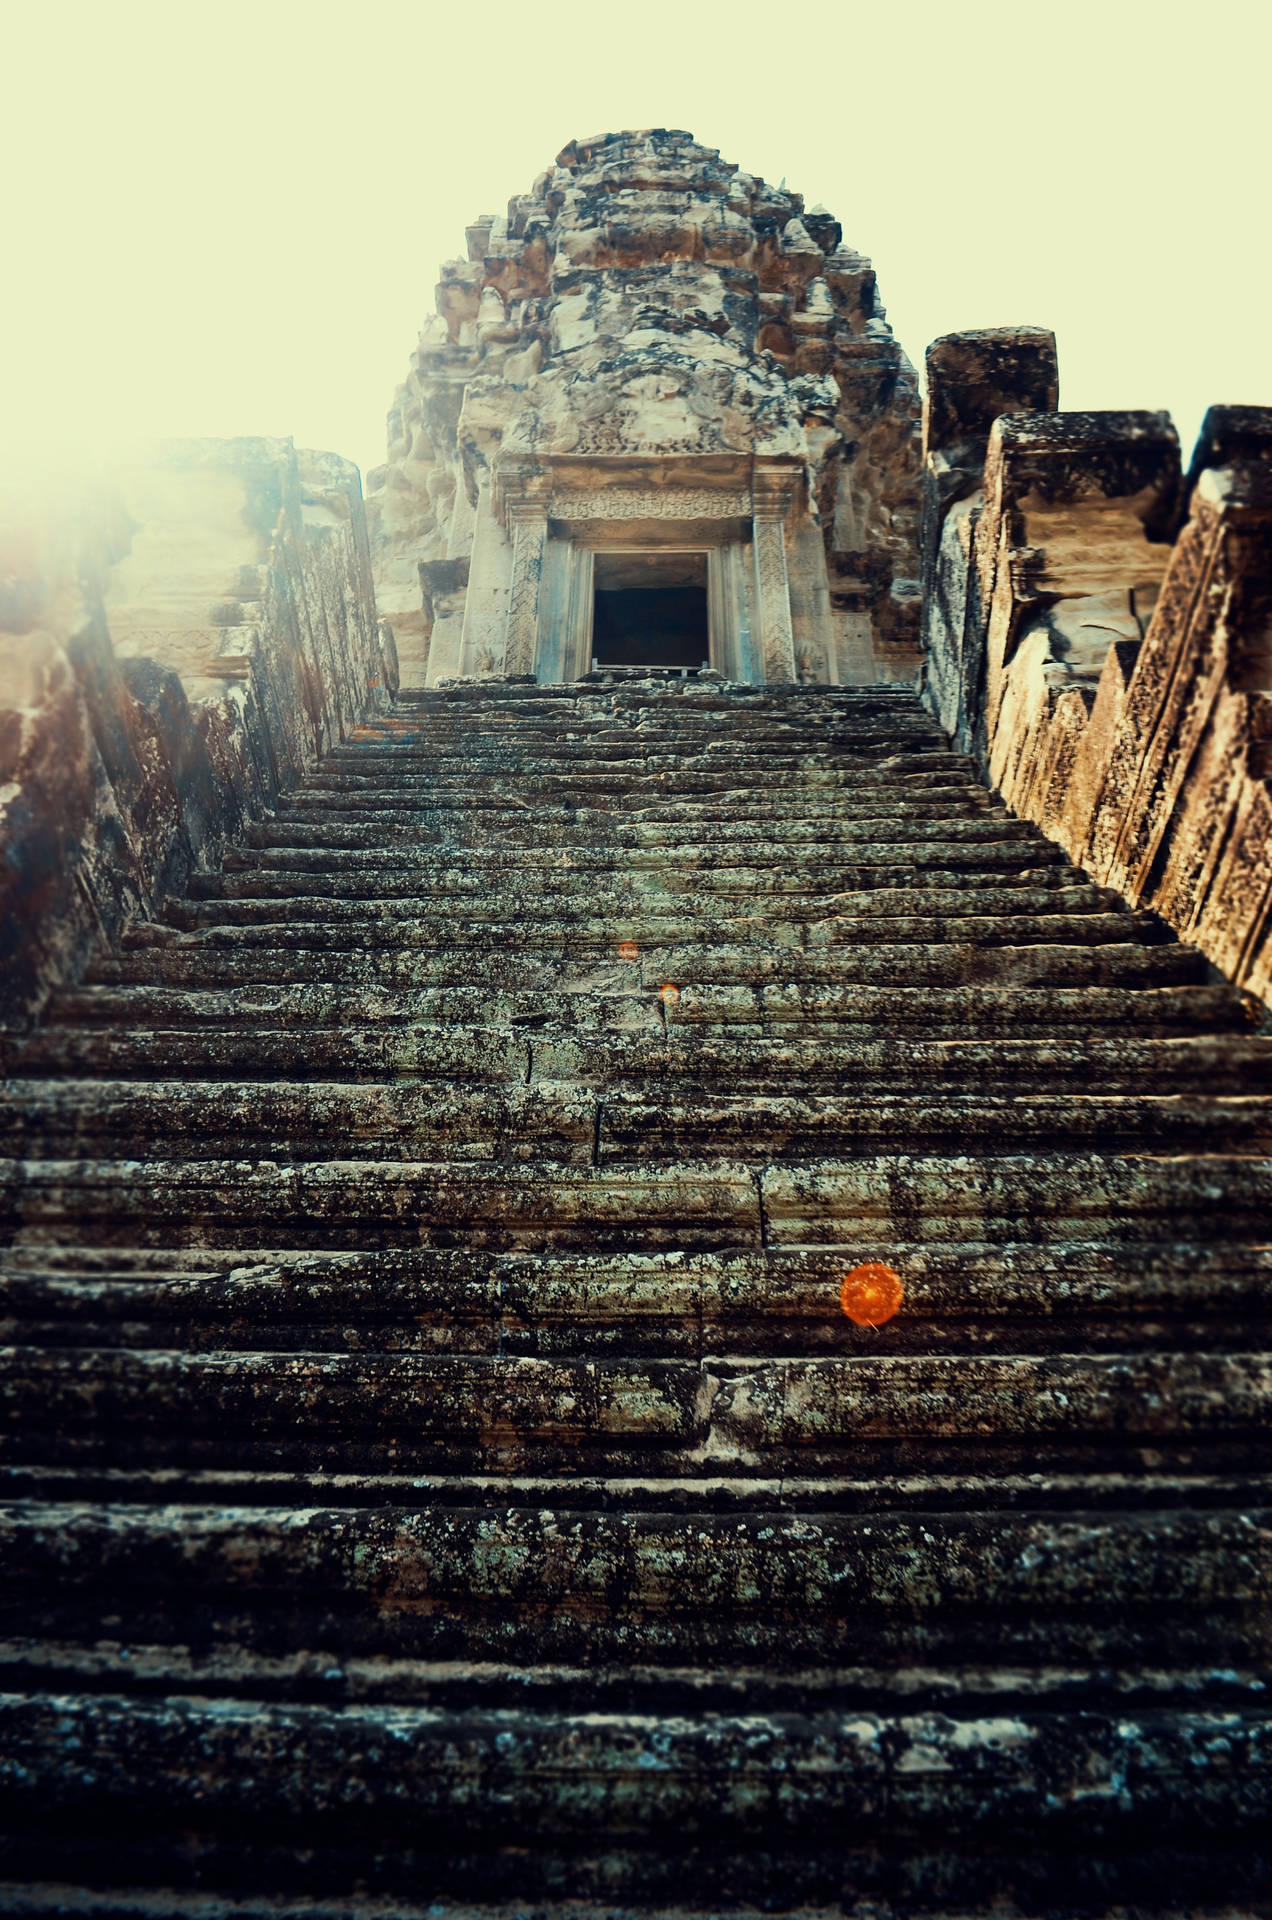 Antikatrappan I Angkor Wat-ruinerna (for A Computer Or Mobile Wallpaper Featuring An Image Of An Ancient Staircase In The Ruins Of Angkor Wat) Wallpaper